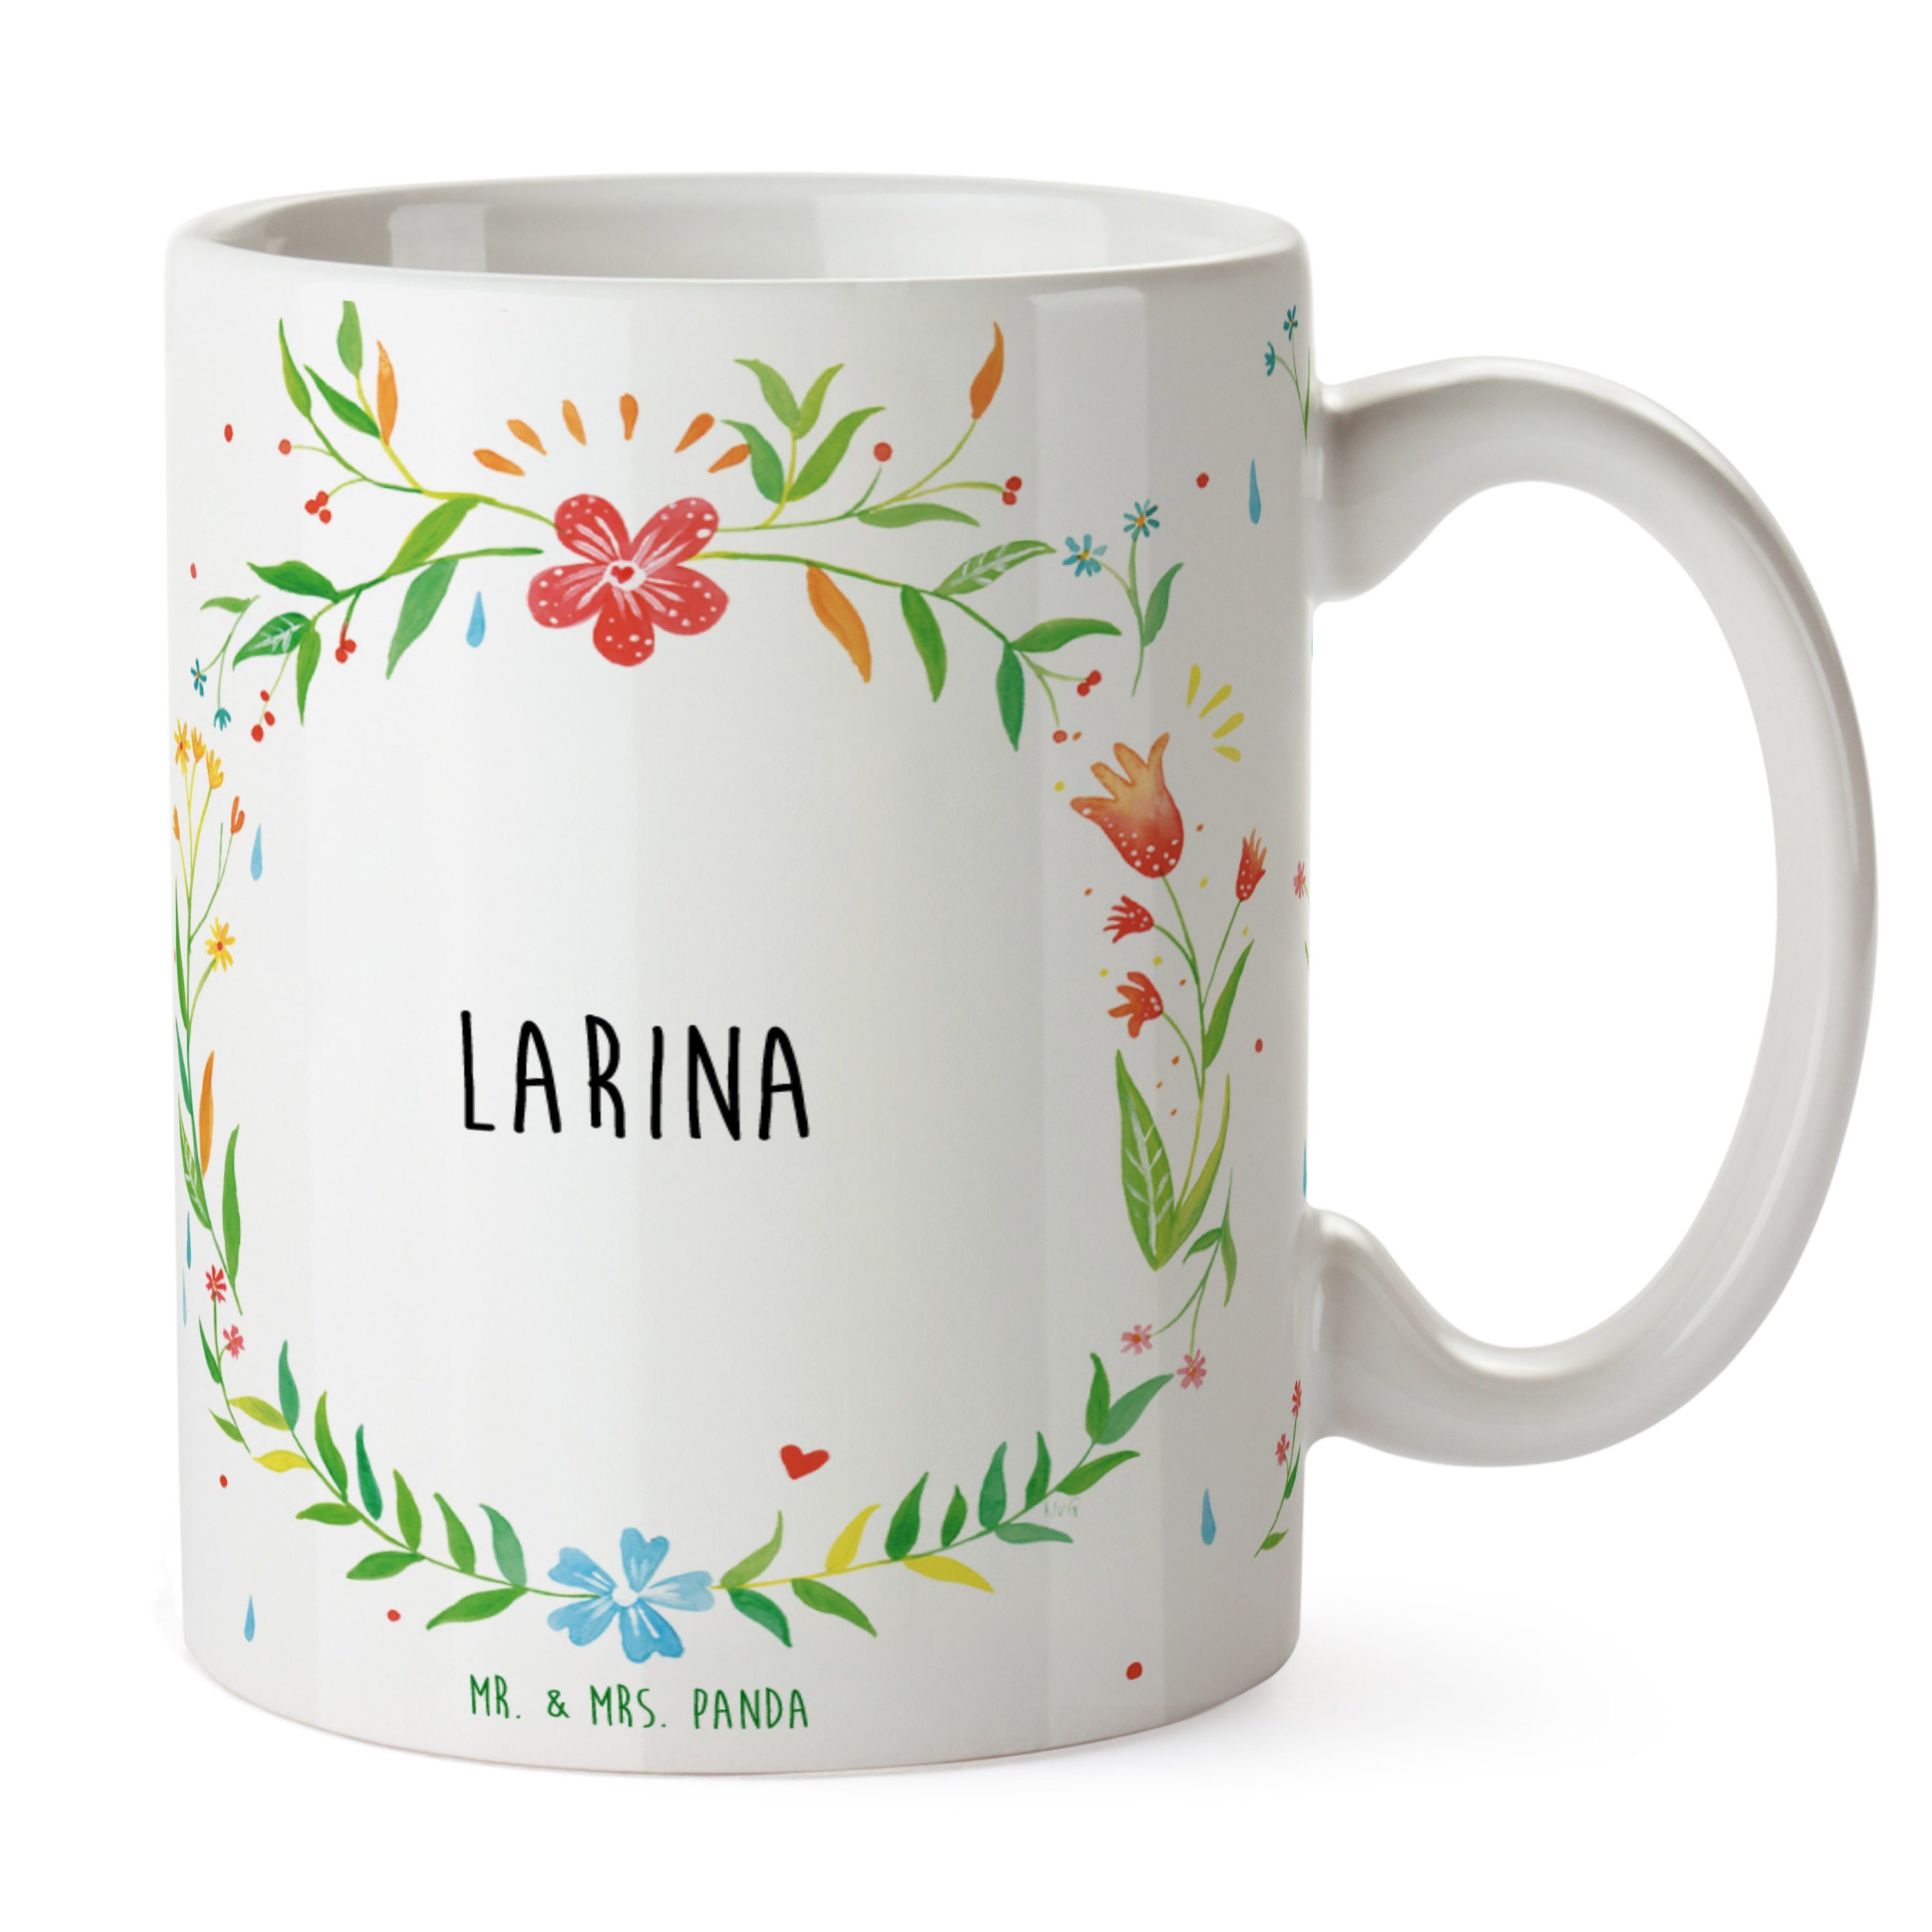 Motive, Larina & Geschenk, Keramik Mr. Becher, Mrs. Panda Tasse Tasse Kaffeebecher, - Keramiktasse,